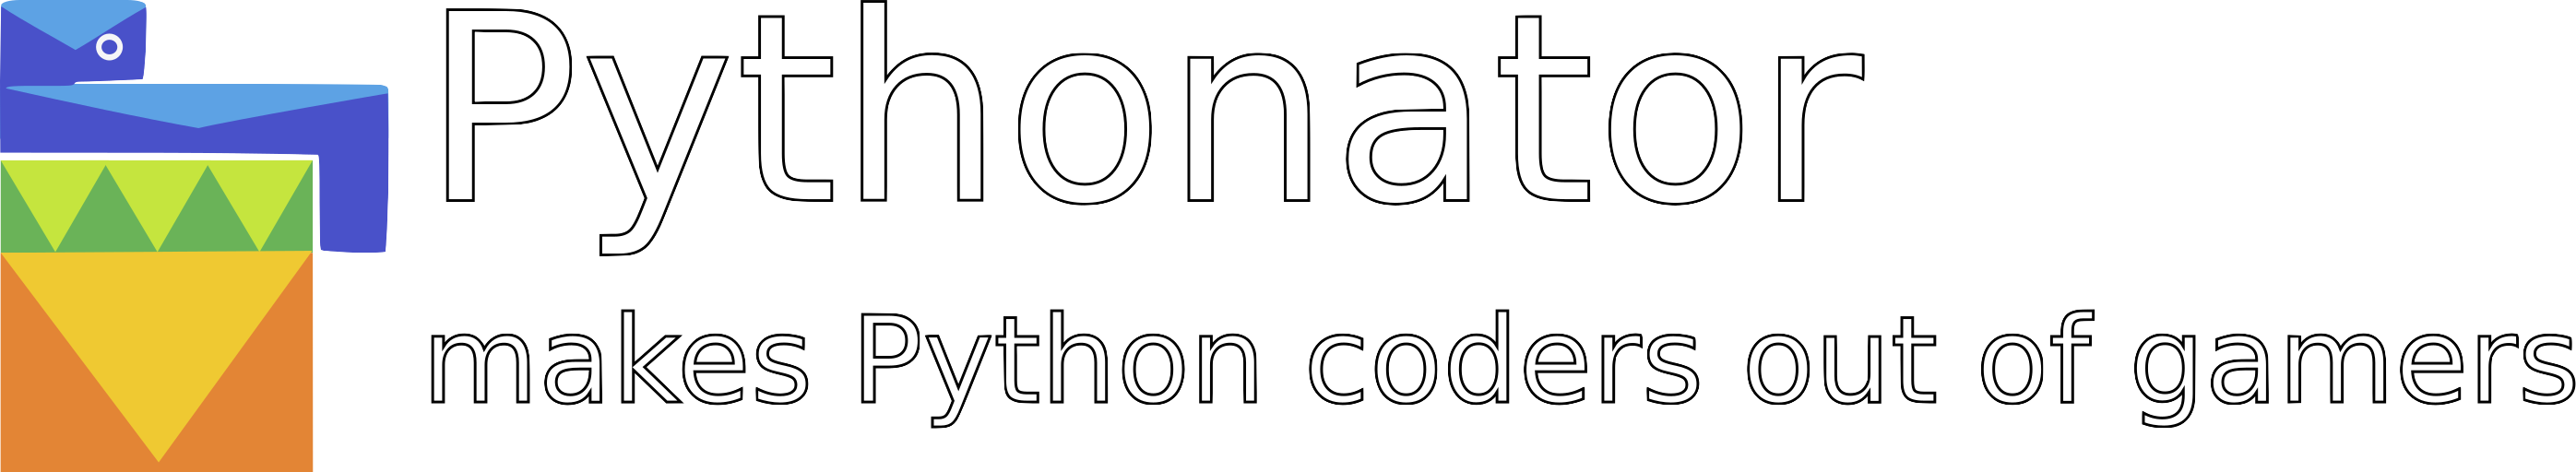 Pythonator